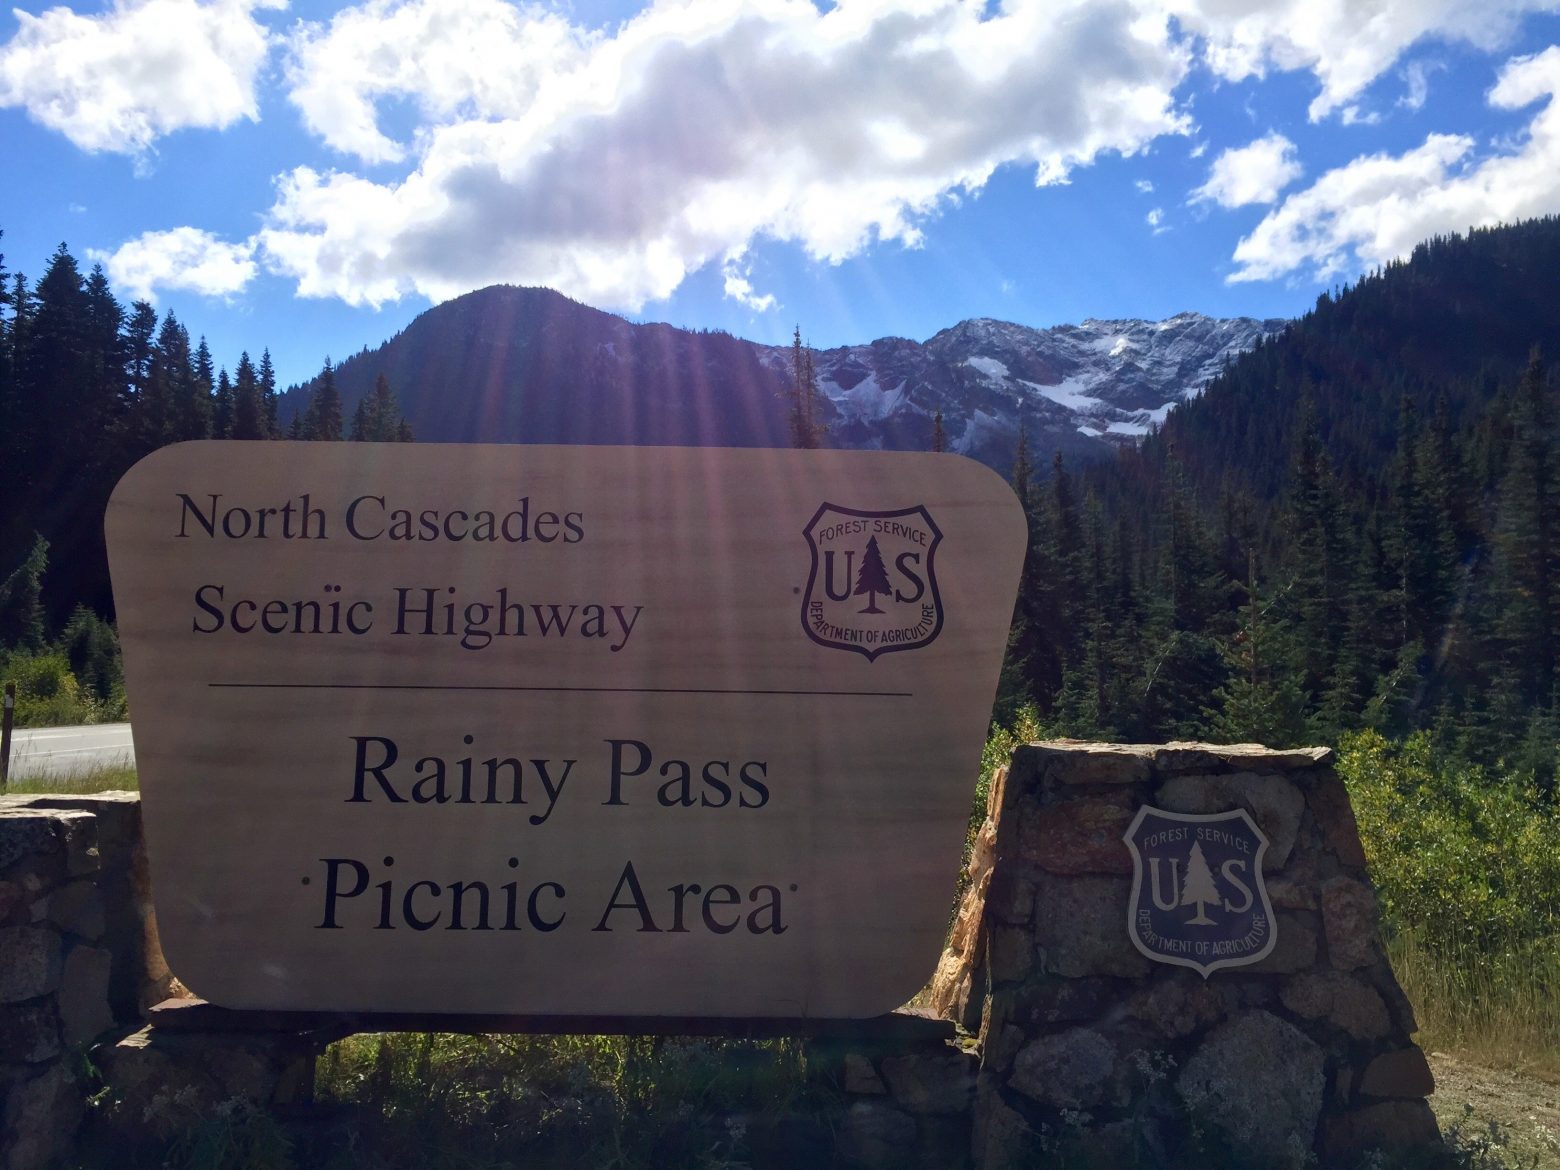 Rainy Pass sign under blue skies